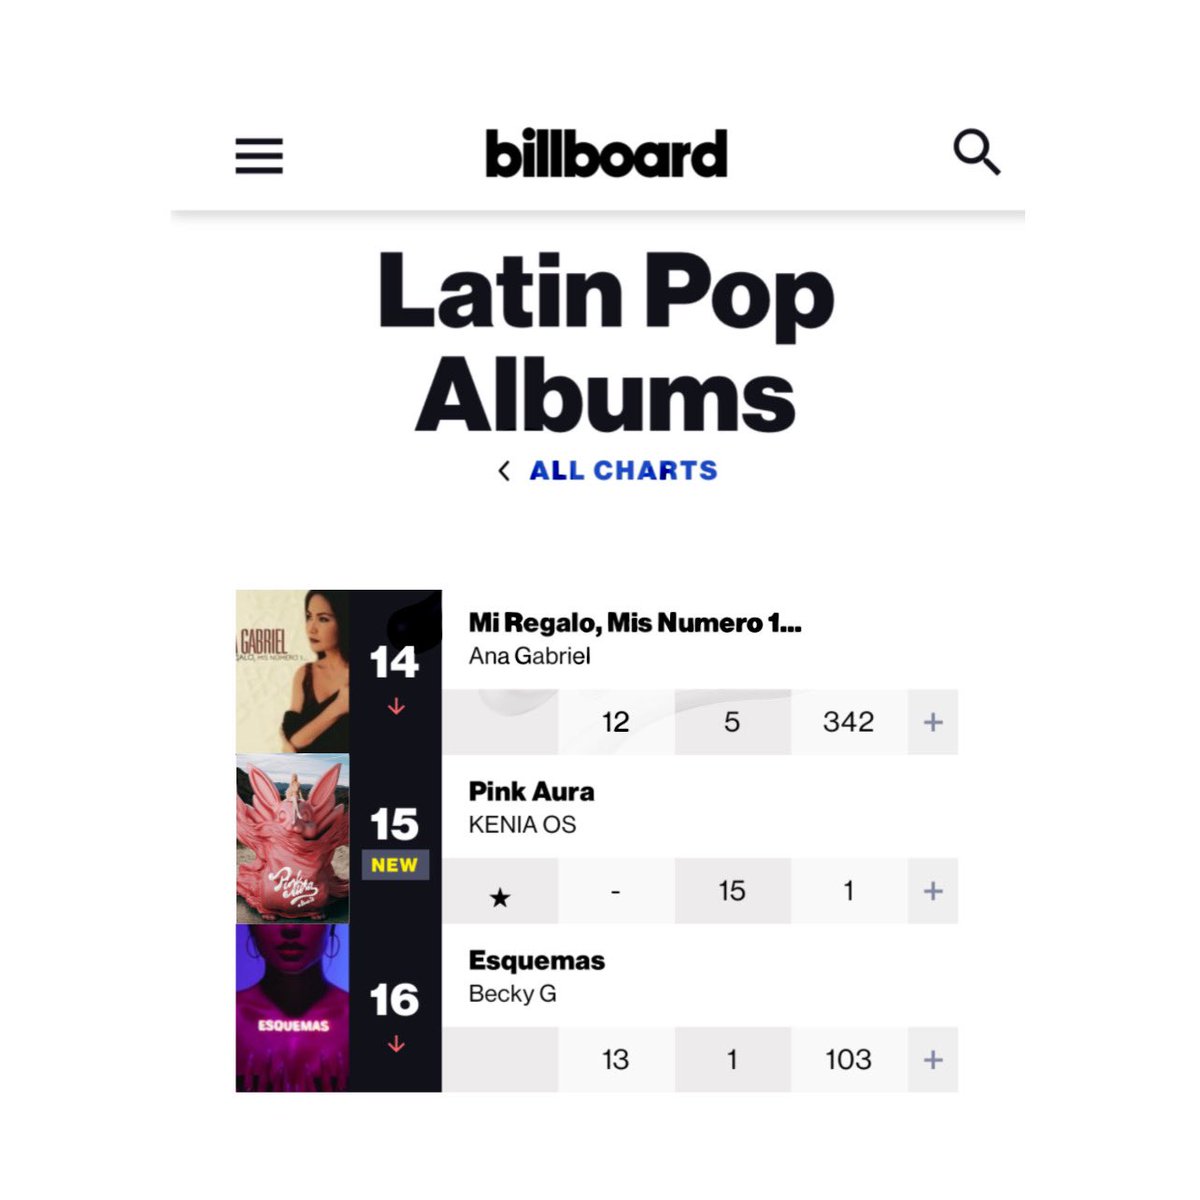 Billboard Latin Pop Albums: #15. “Pink Aura” — @KeniaOS (New)